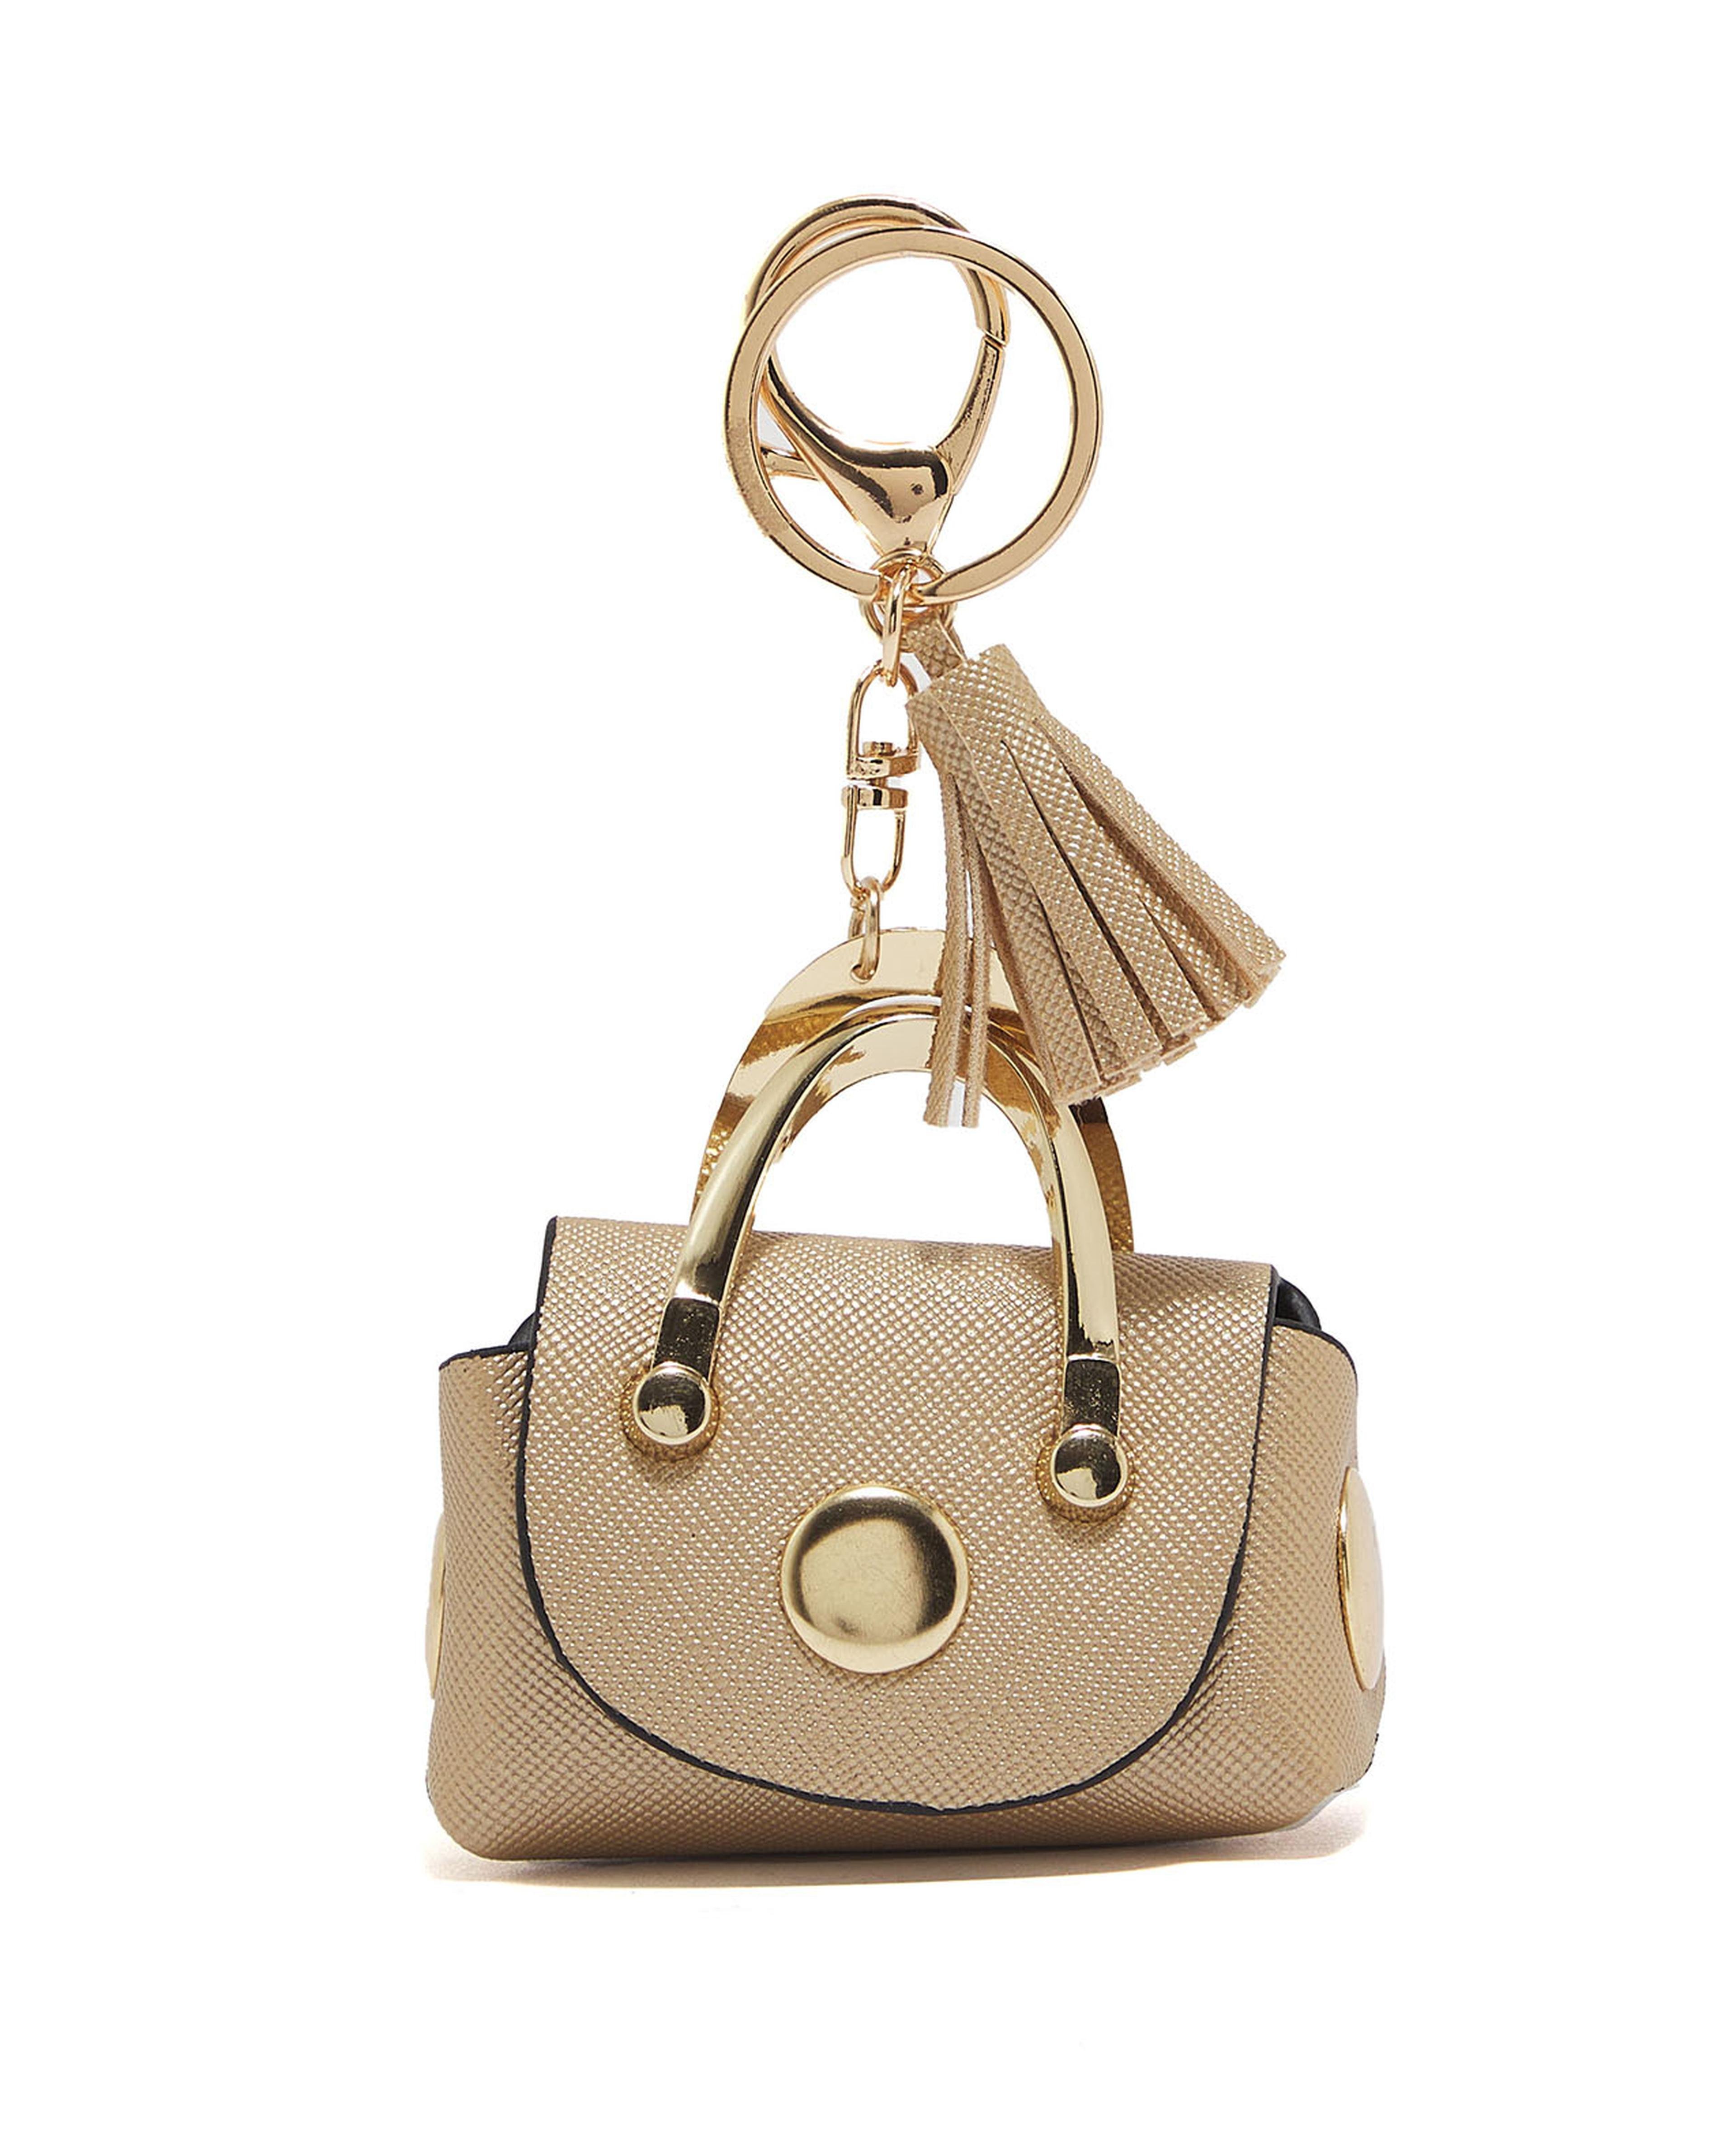 Handbag Charm Keychain